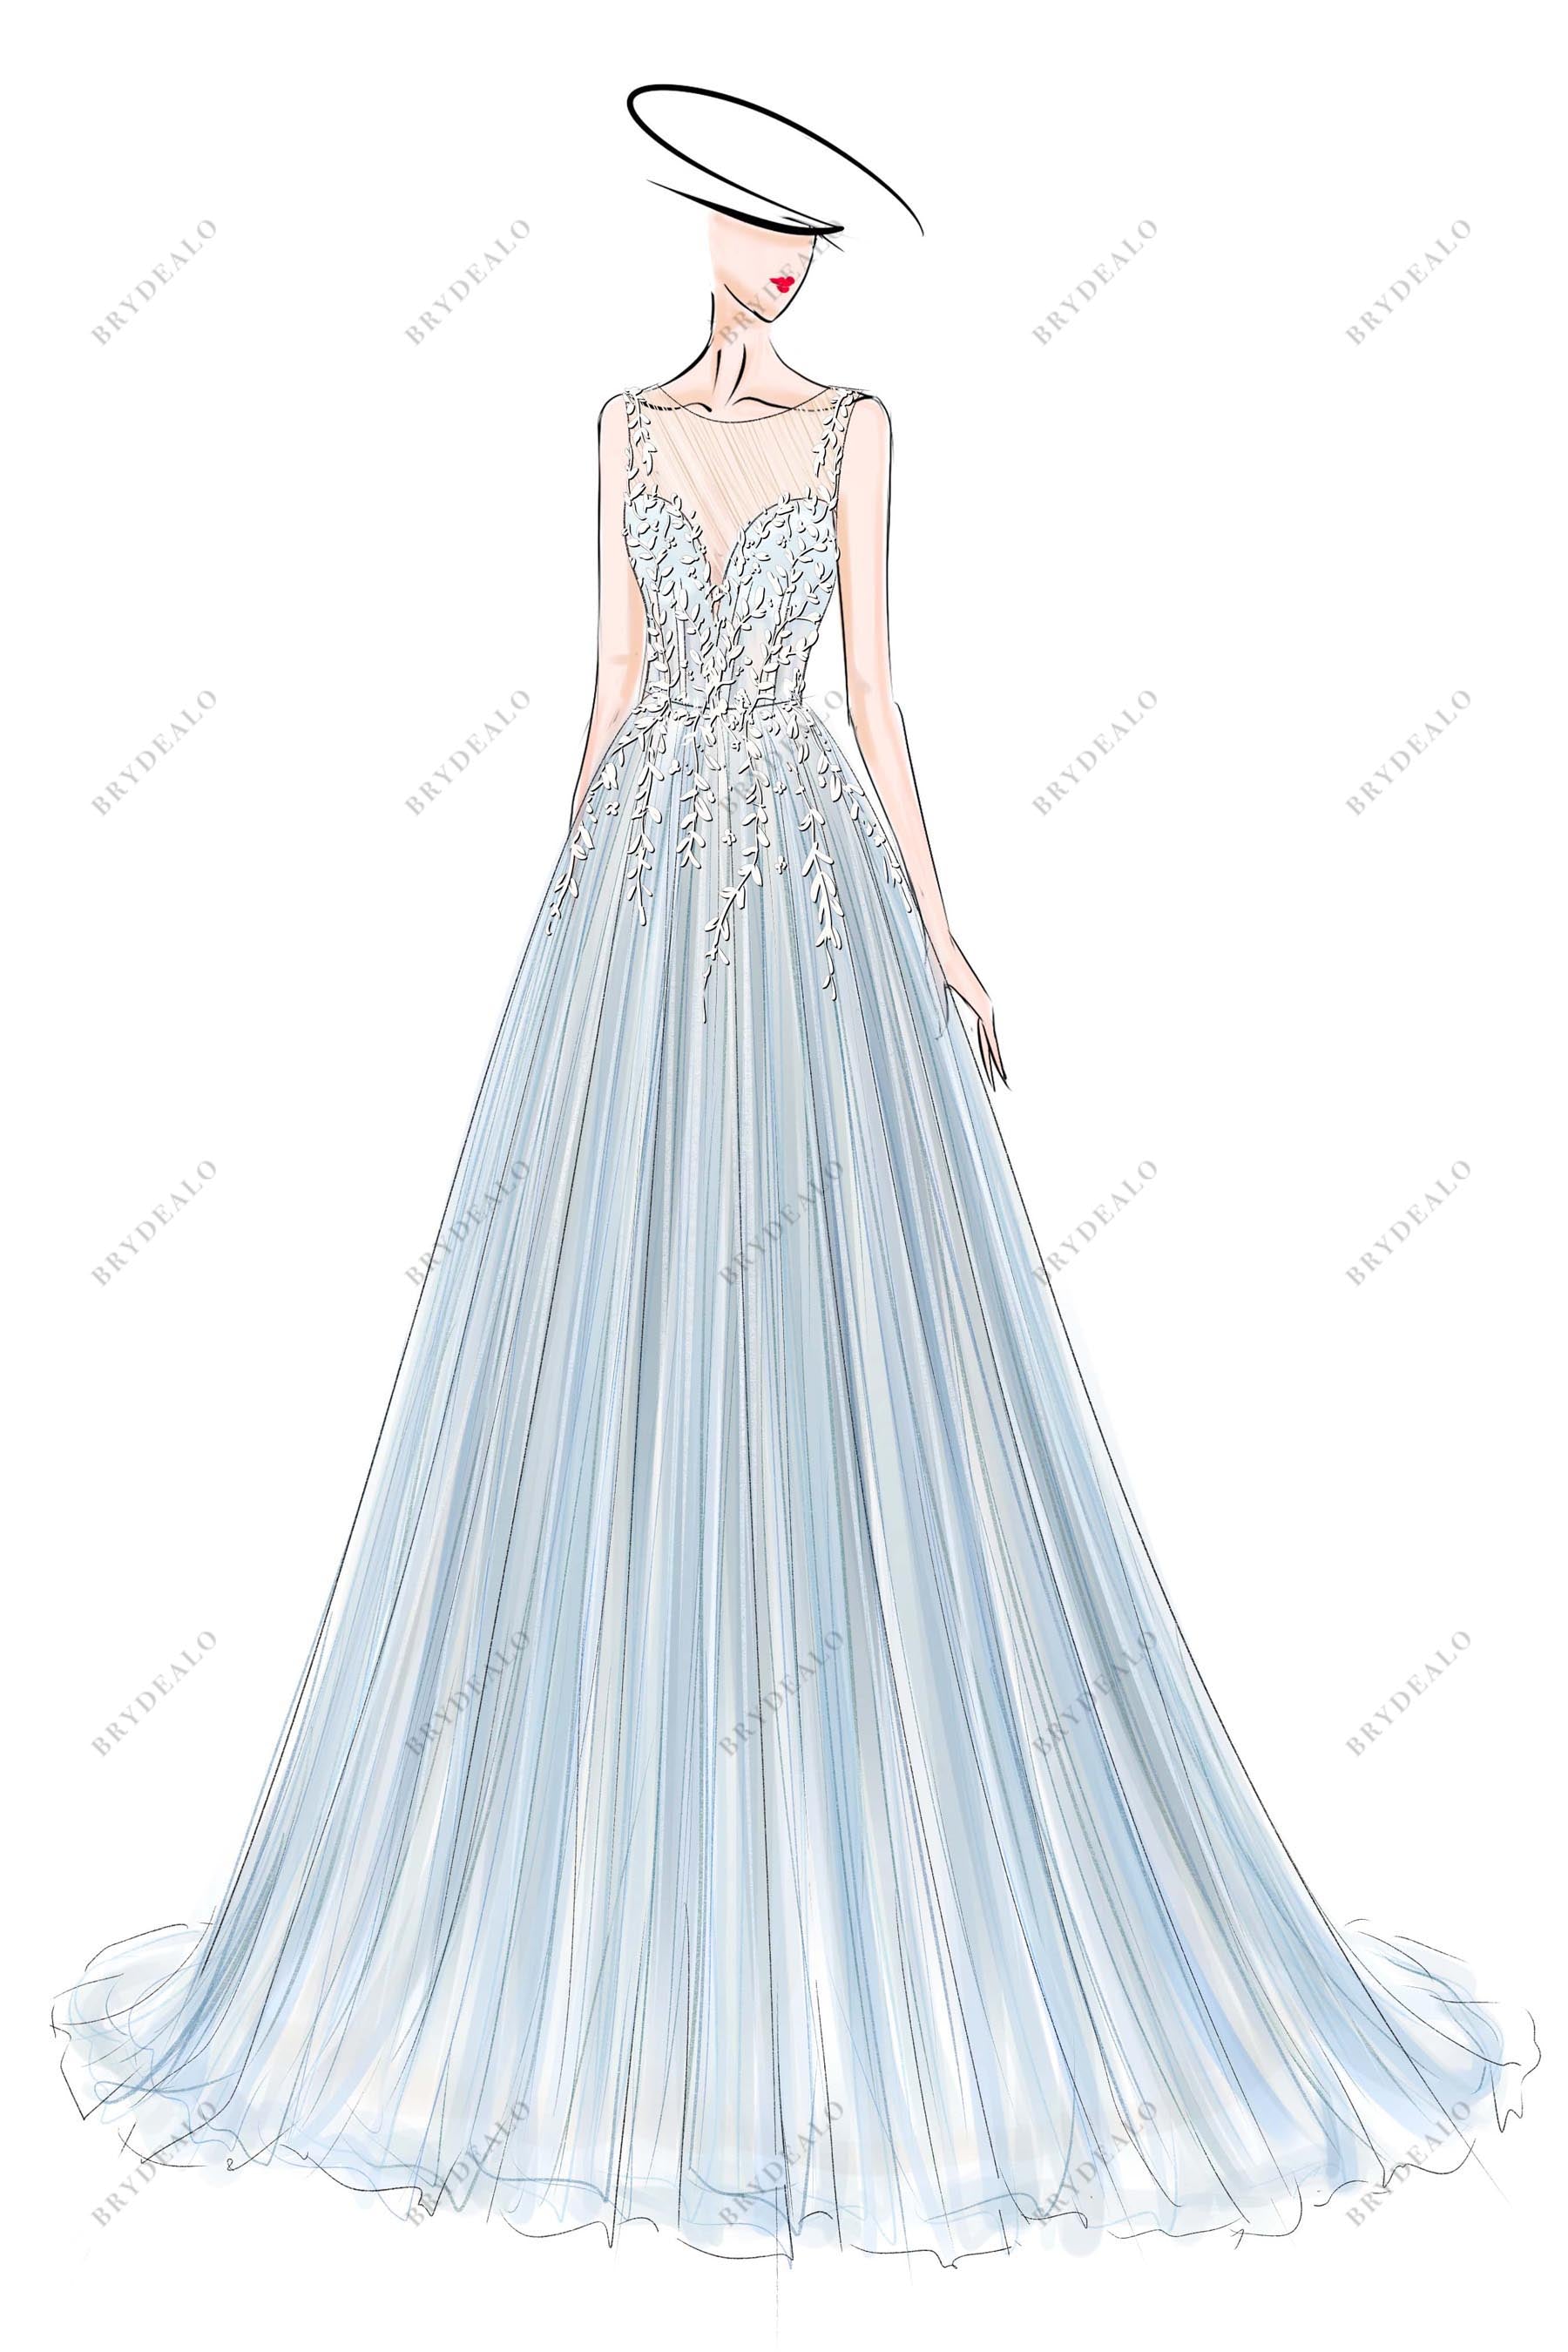 custom blue lace tulle wedding dress sketch